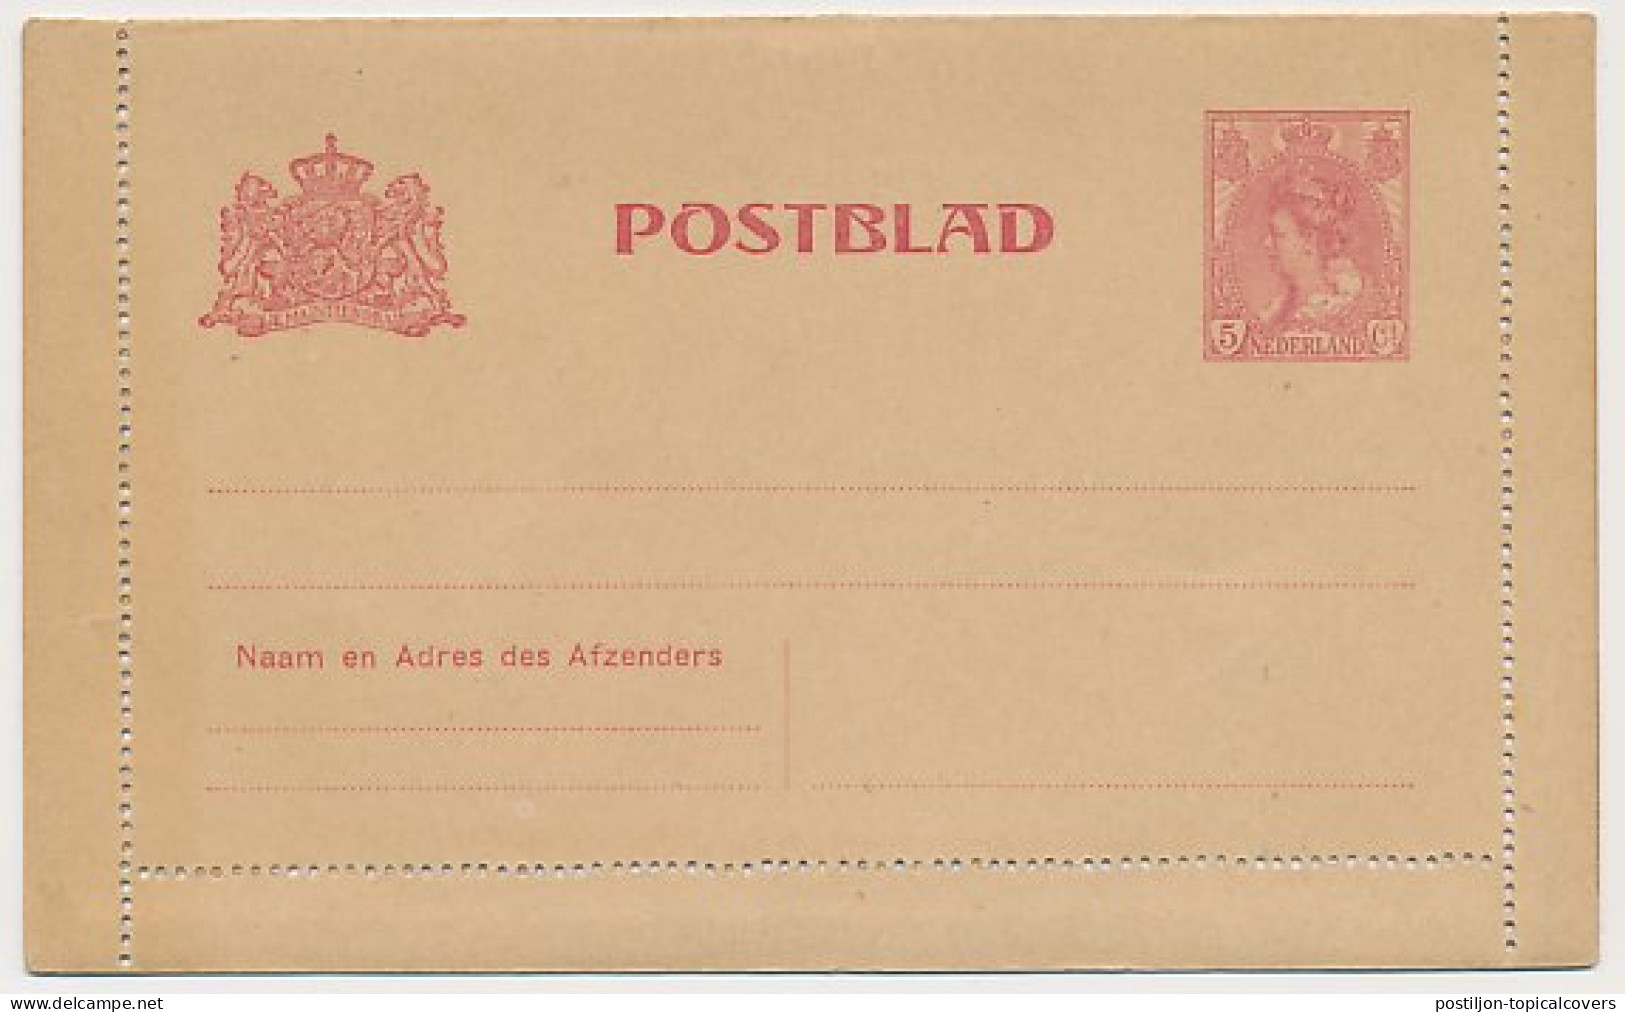 Postblad G. 14 - Bruin Papier - Onregelmatig Geperforeerd - Interi Postali